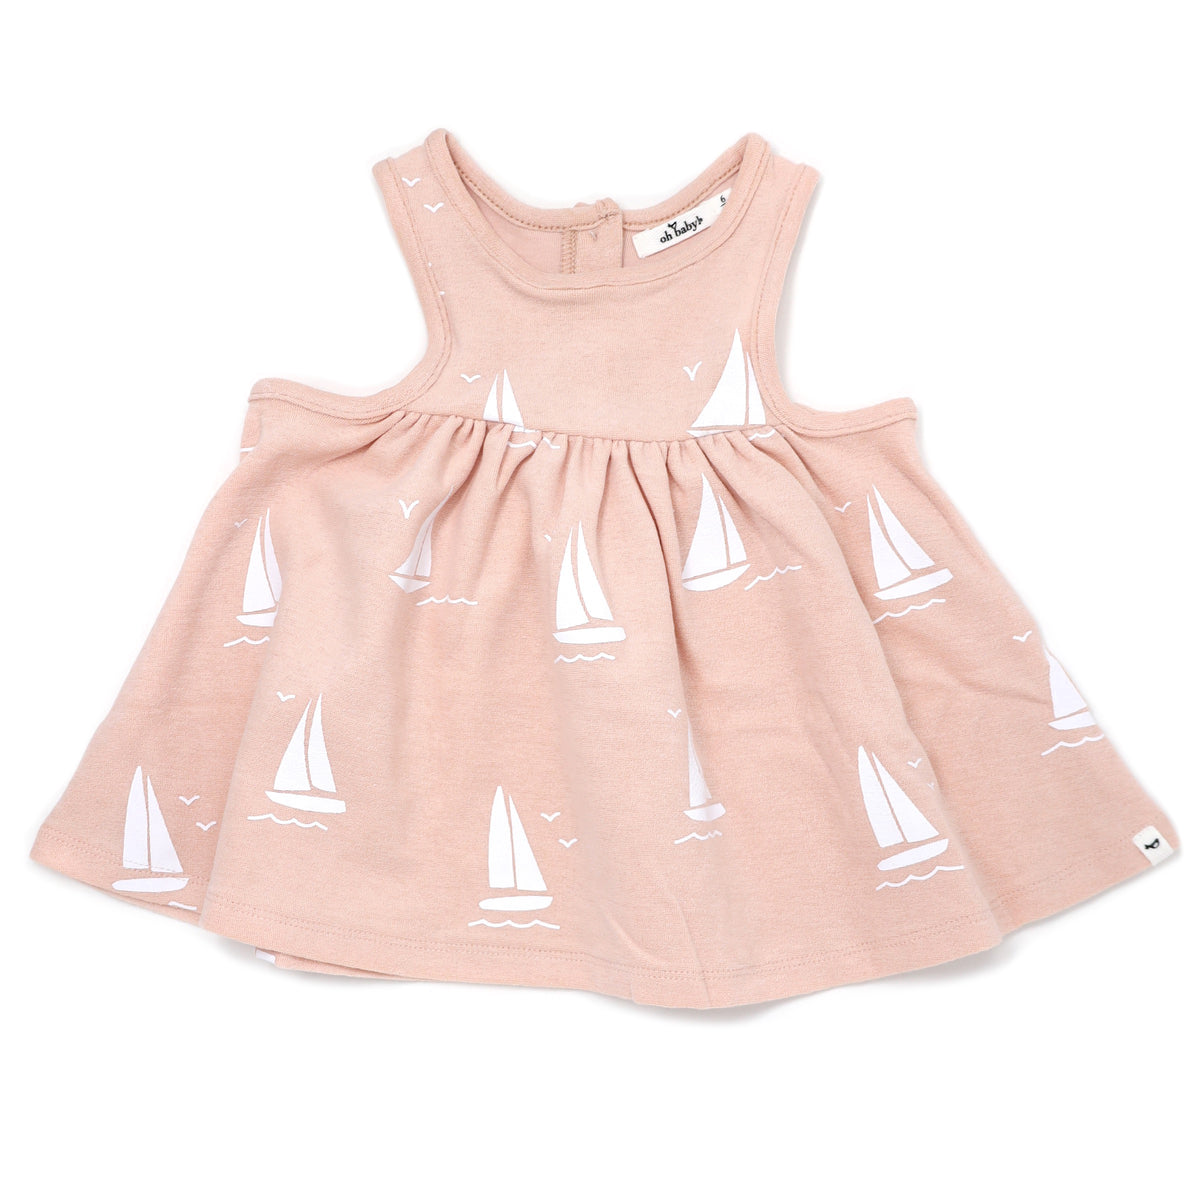 oh baby! Cotton Terry Tank Dress - Sailboat Print - Peachy